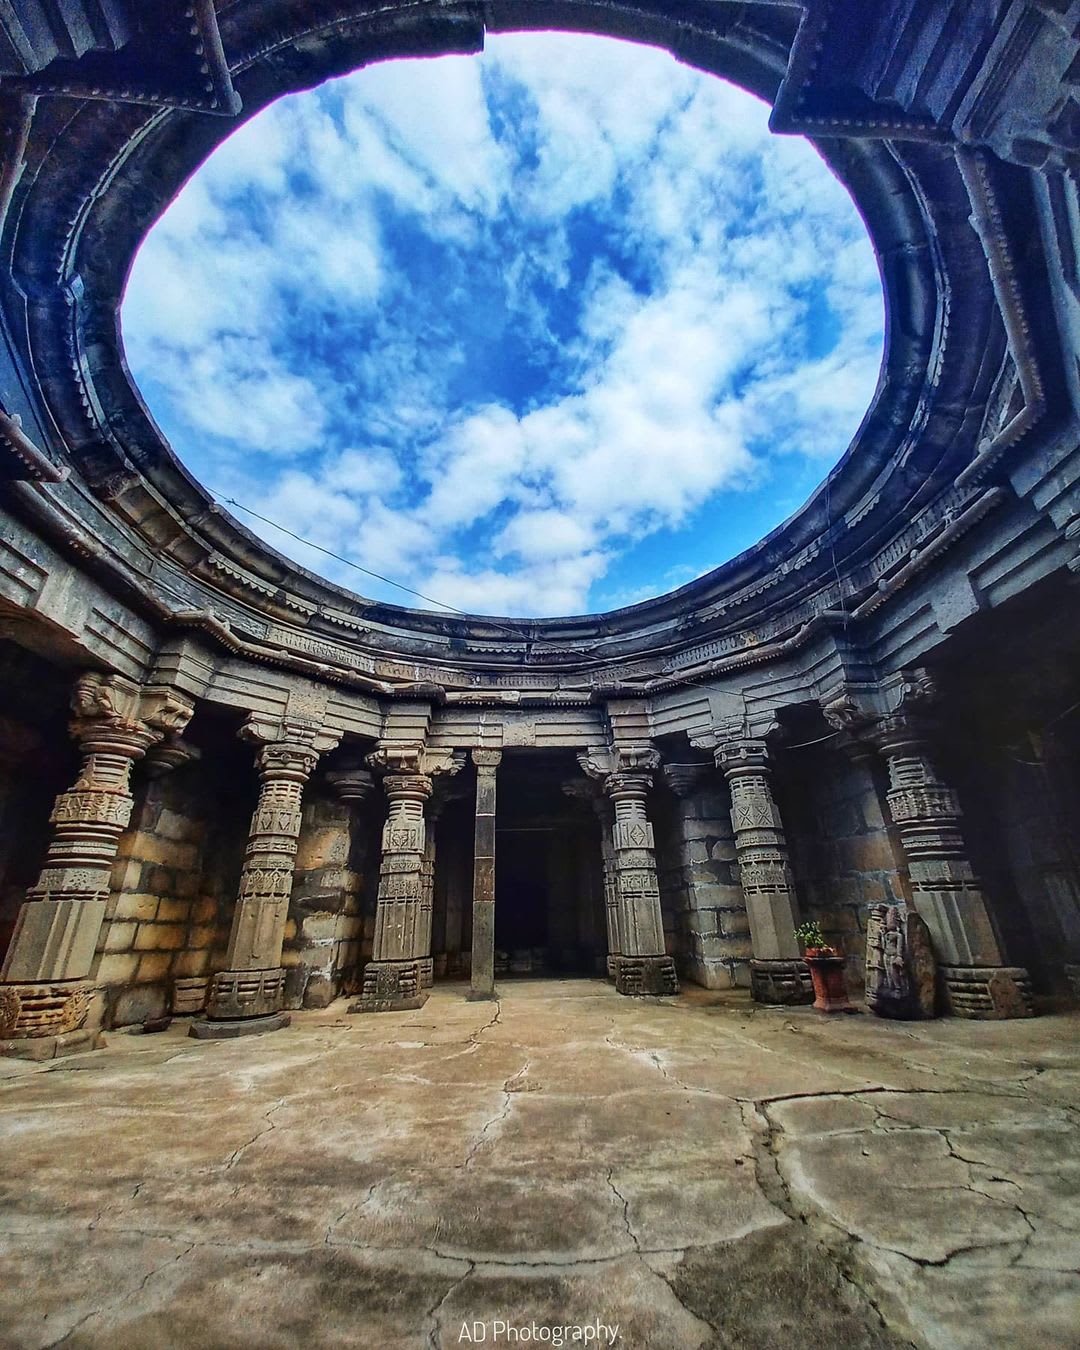 Anandeshwar Temple, built in the Hemadpathi Style, Lasur, Maharashtra, India